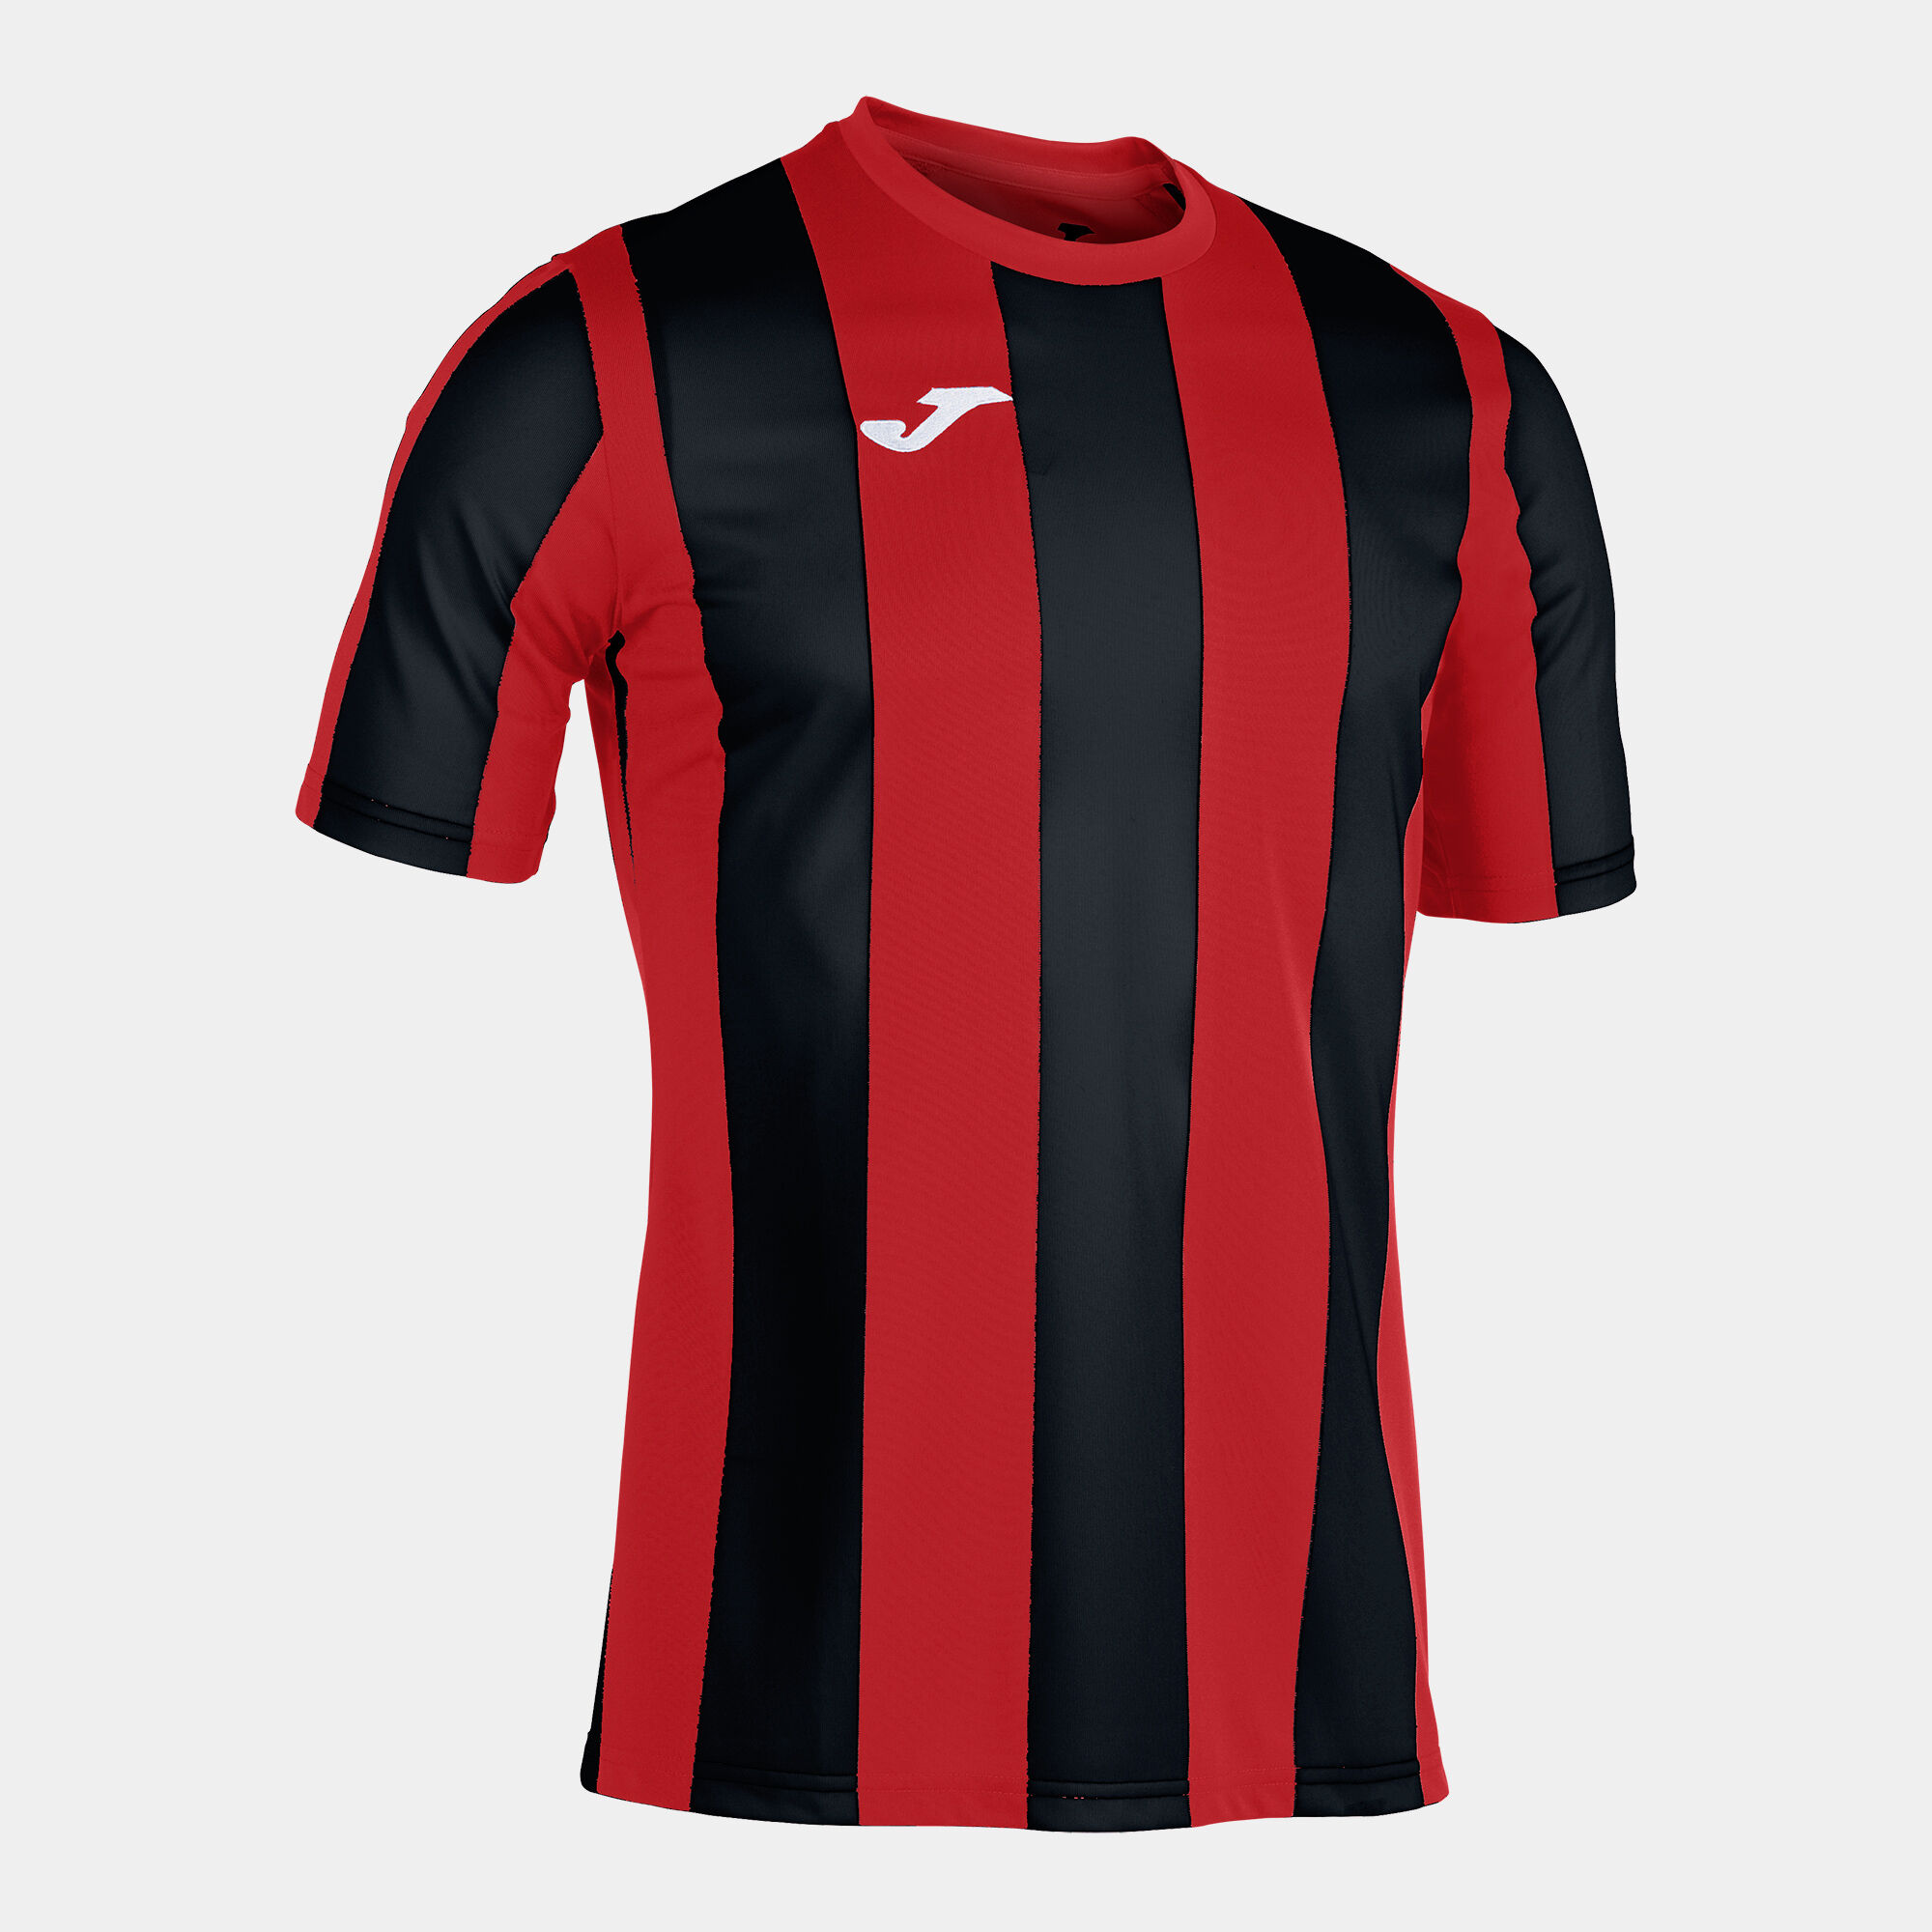 Camiseta manga corta hombre Inter rojo negro